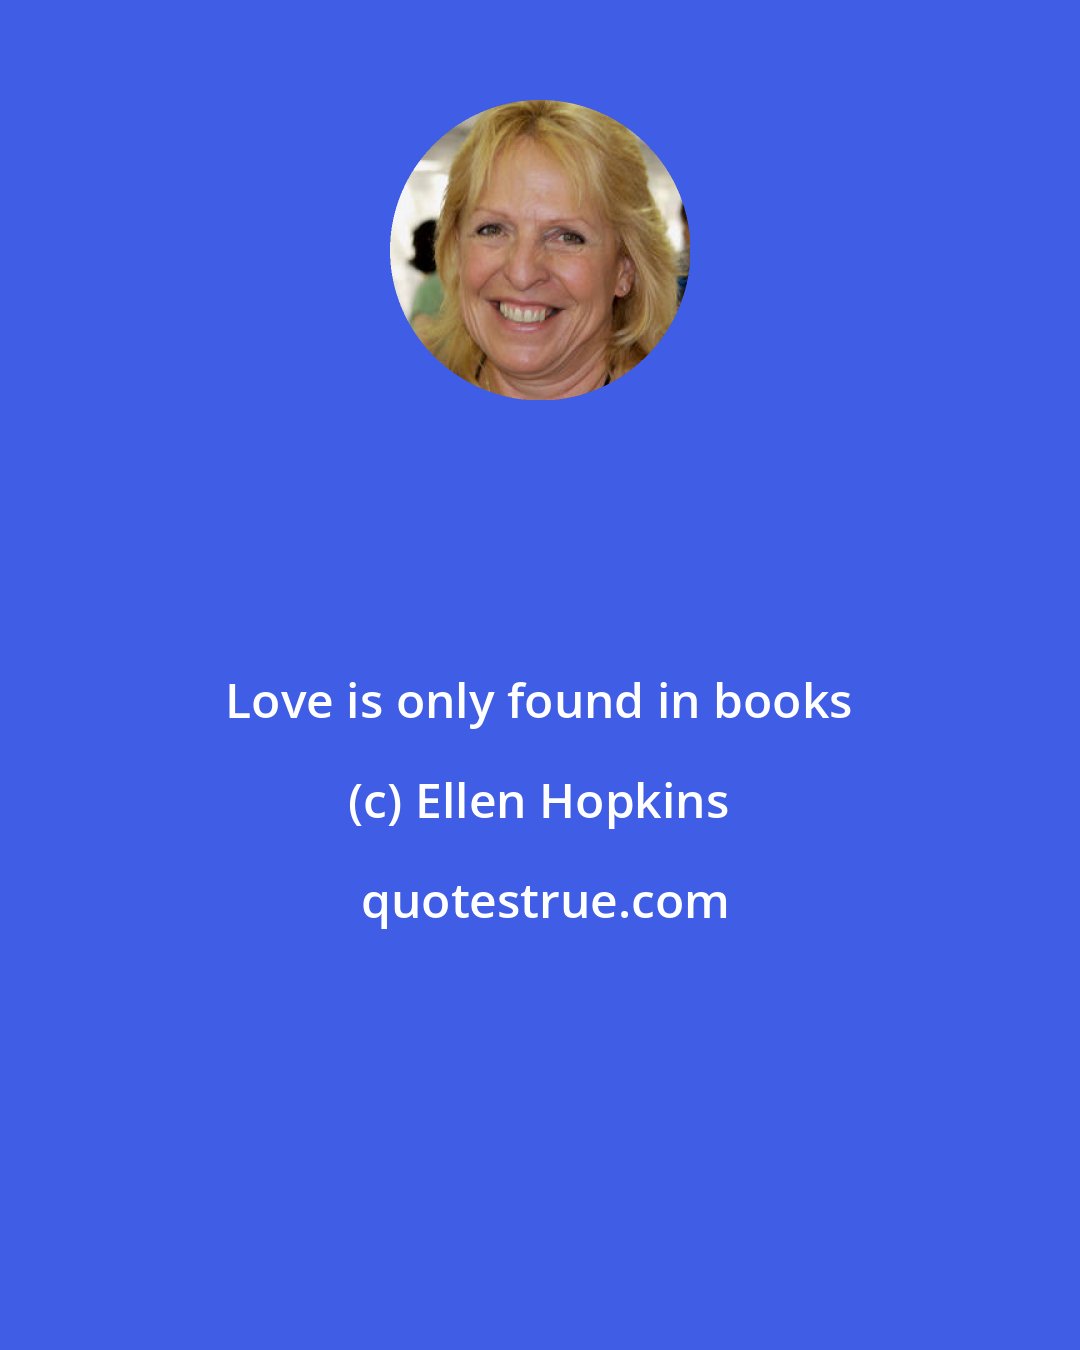 Ellen Hopkins: Love is only found in books